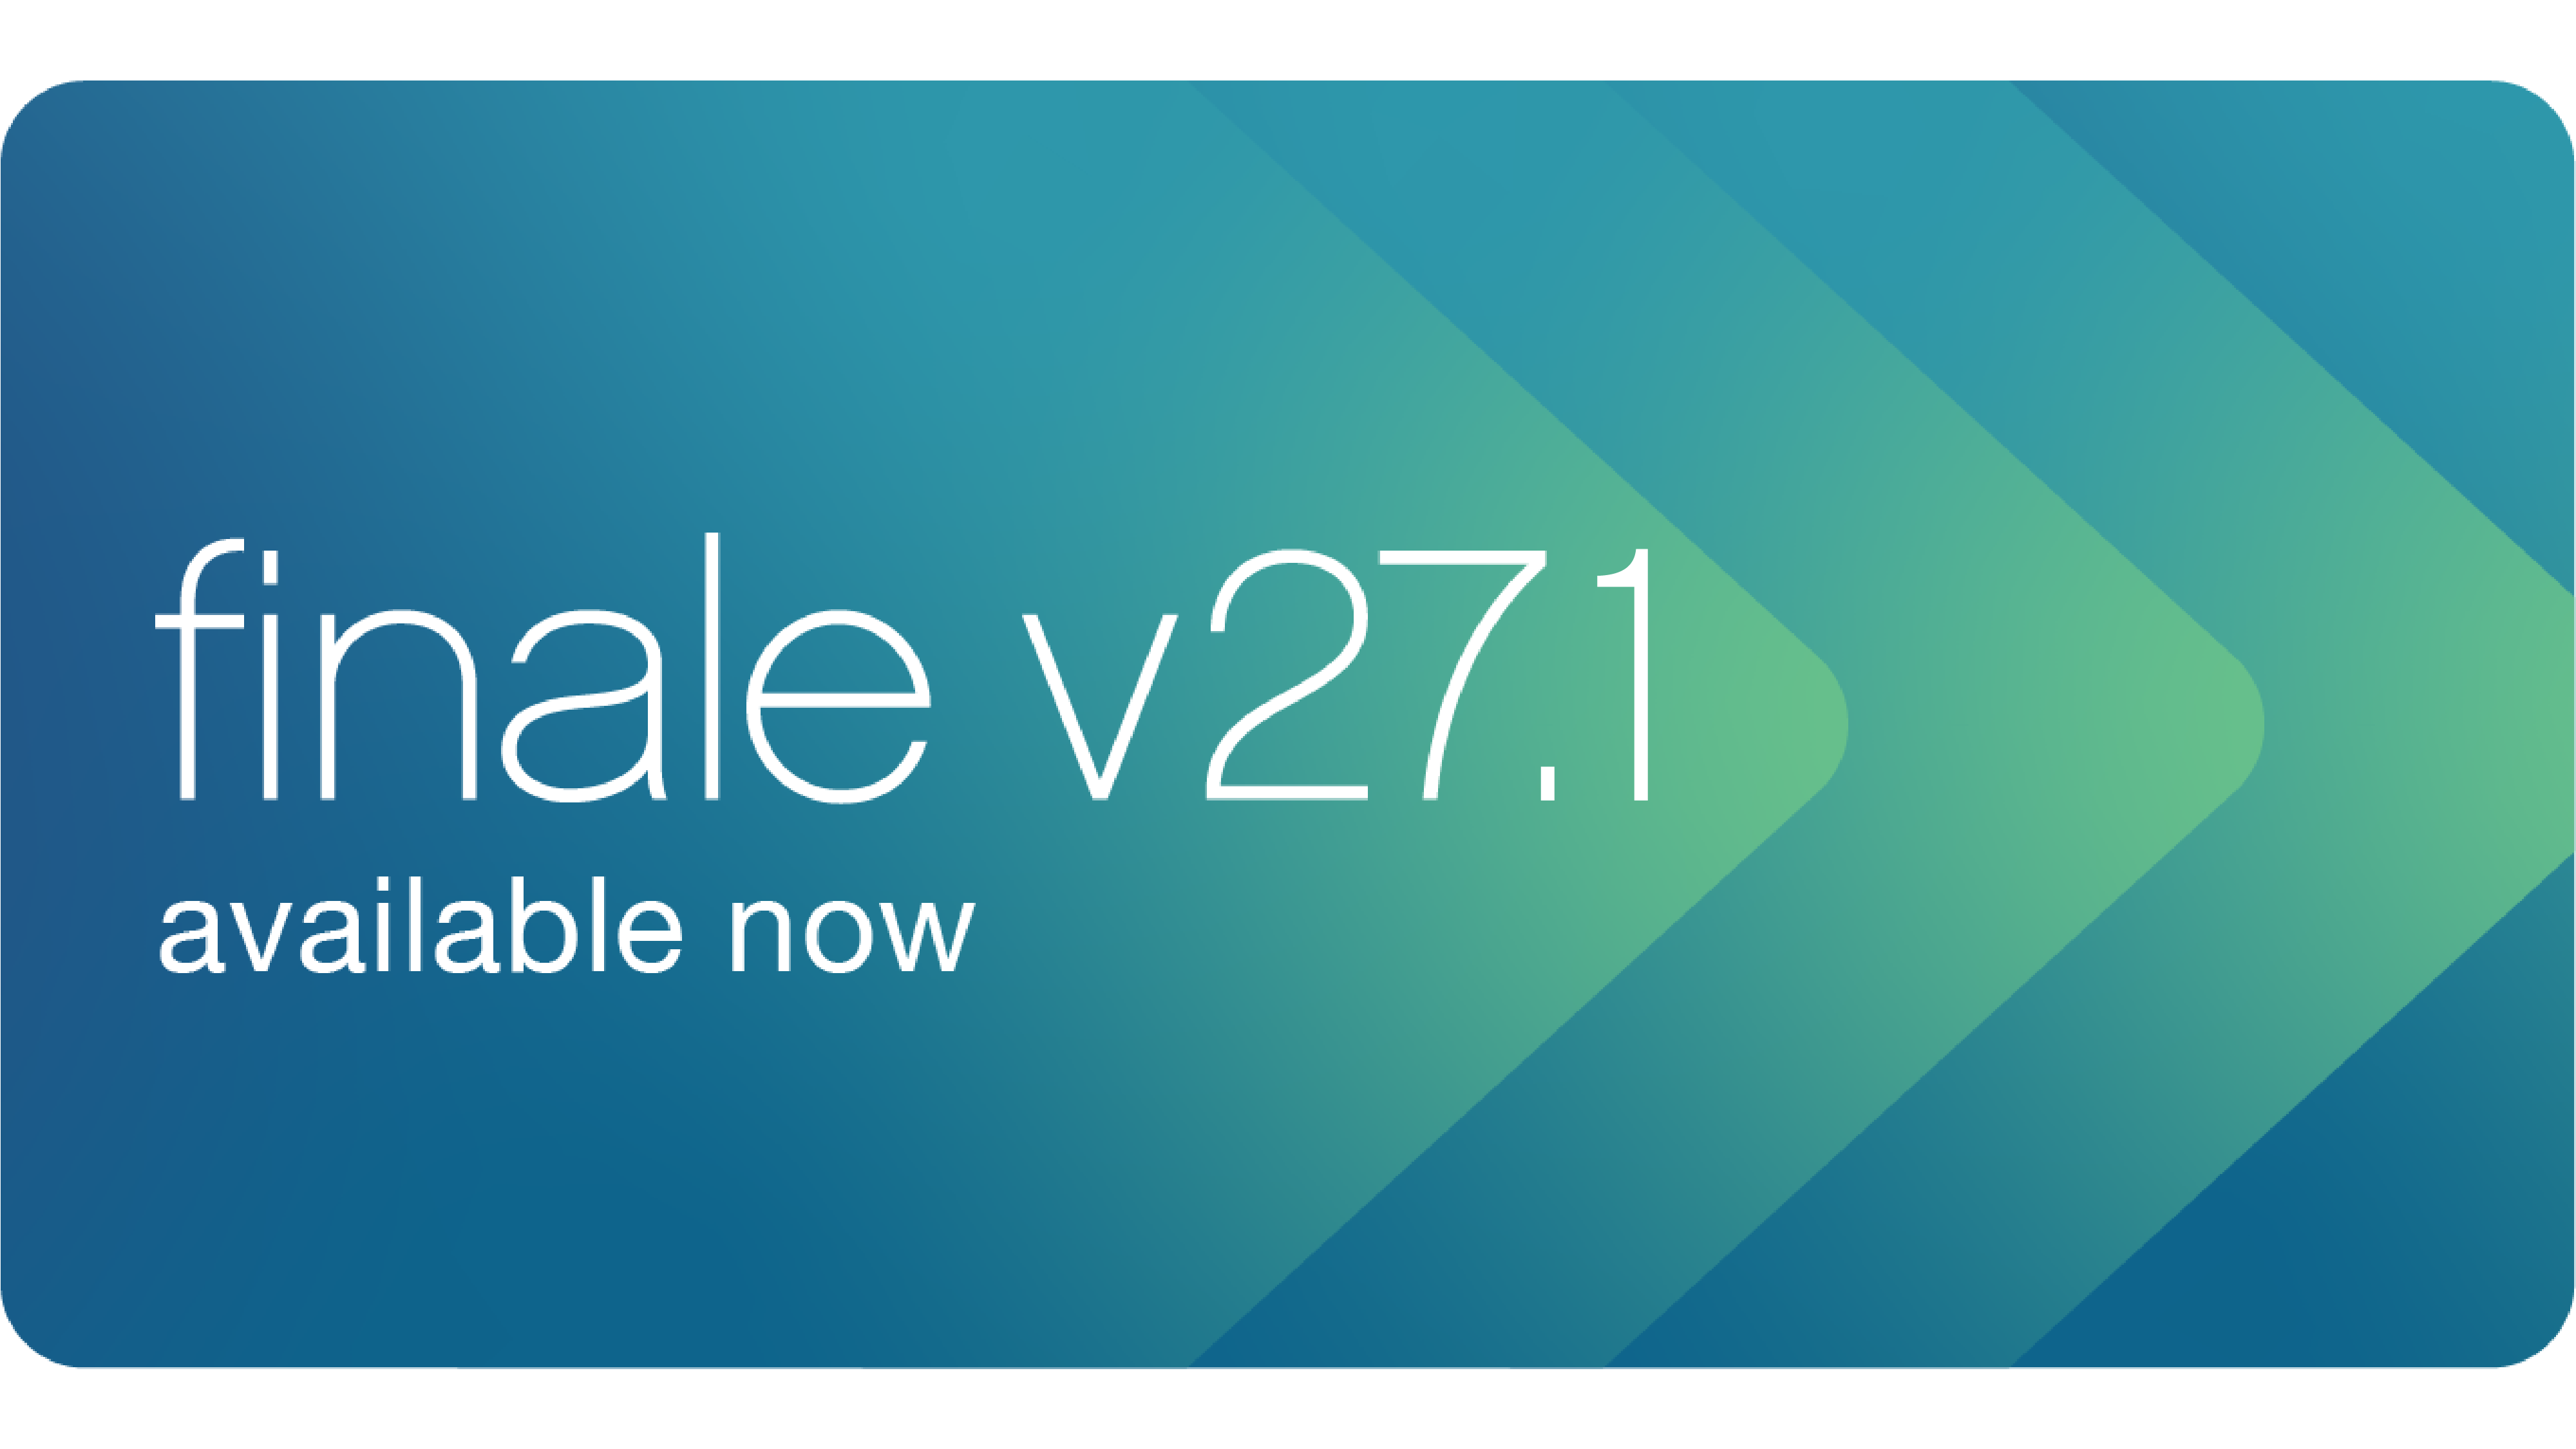 v27.1 available